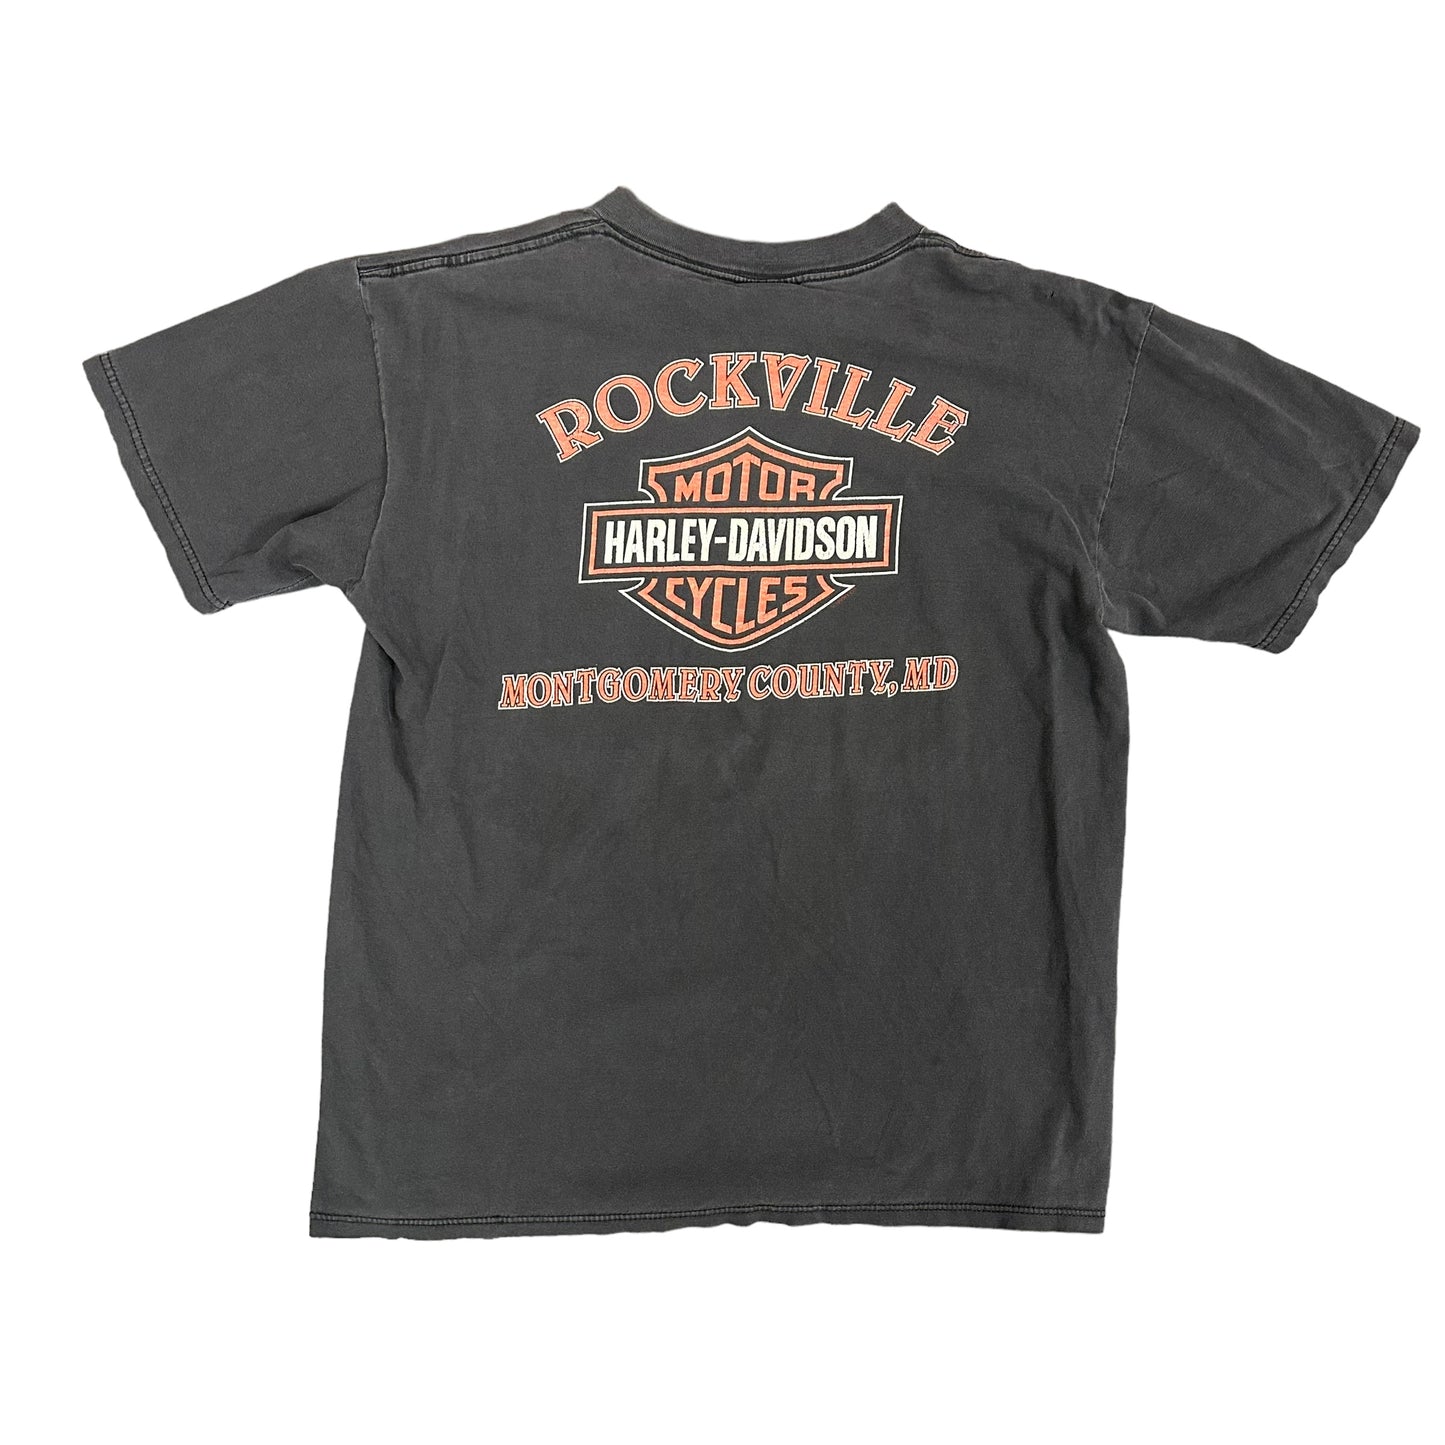 2000 Rockville Harley Tee